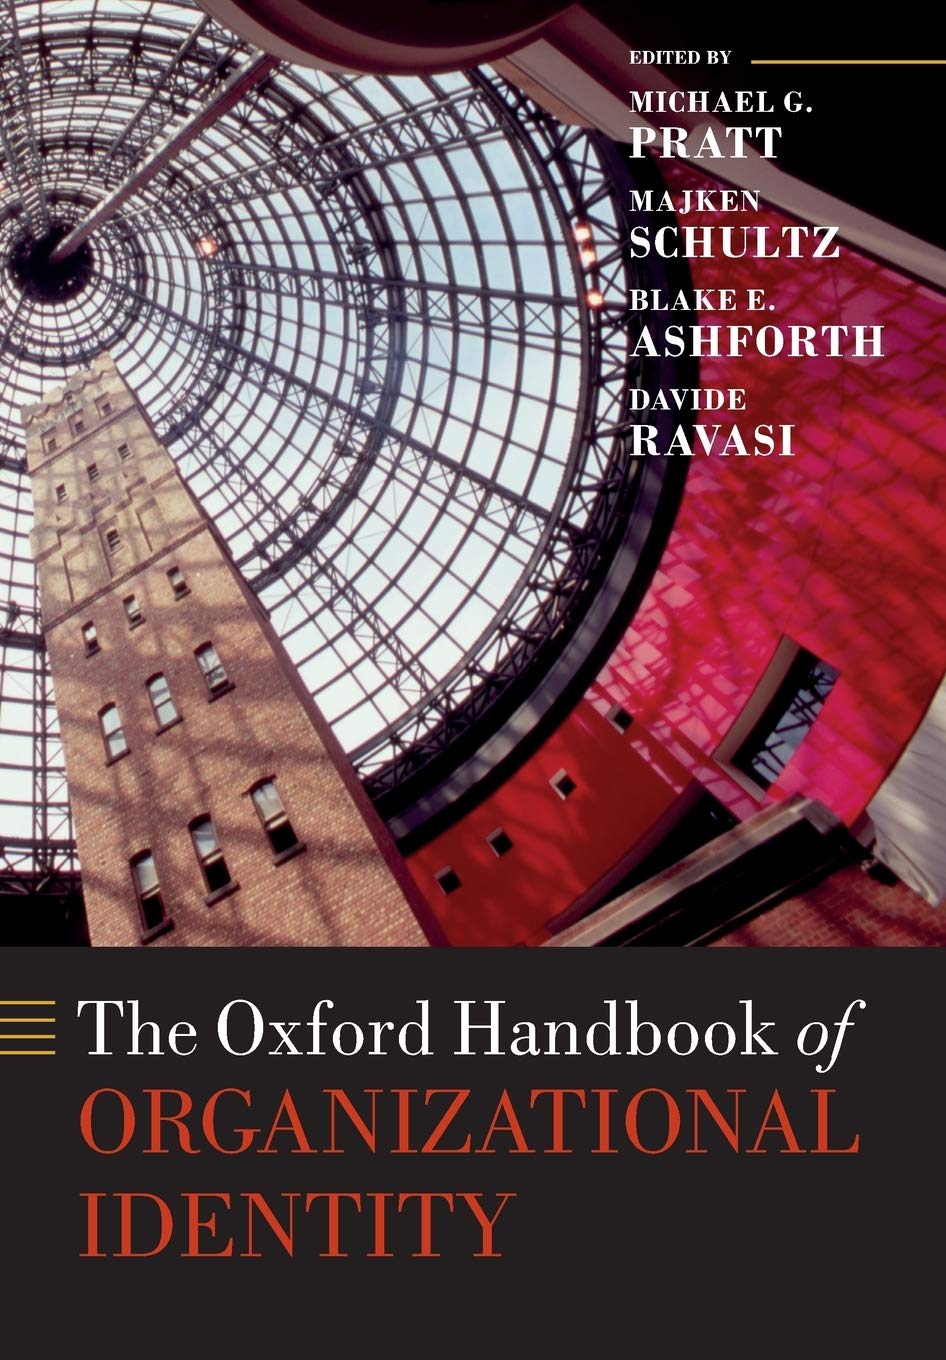 The Oxford Handbook of Organizational Identity | Michael G. Pratt, Majken Schultz, Blake E. Ashforth, Davide Ravasi